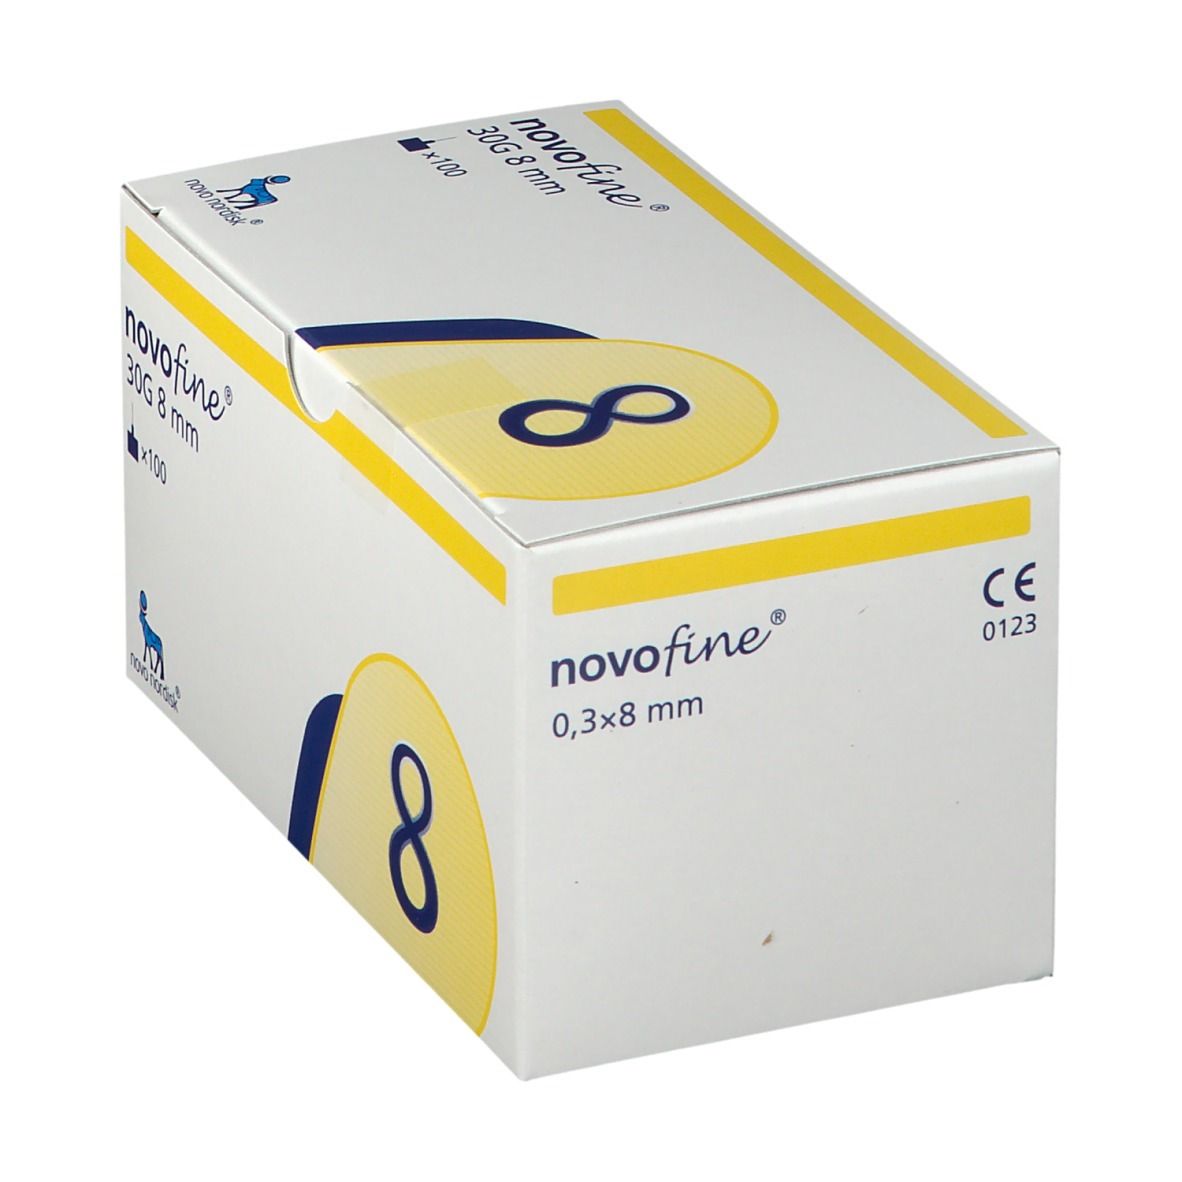 NovoFine® 30G 8mm